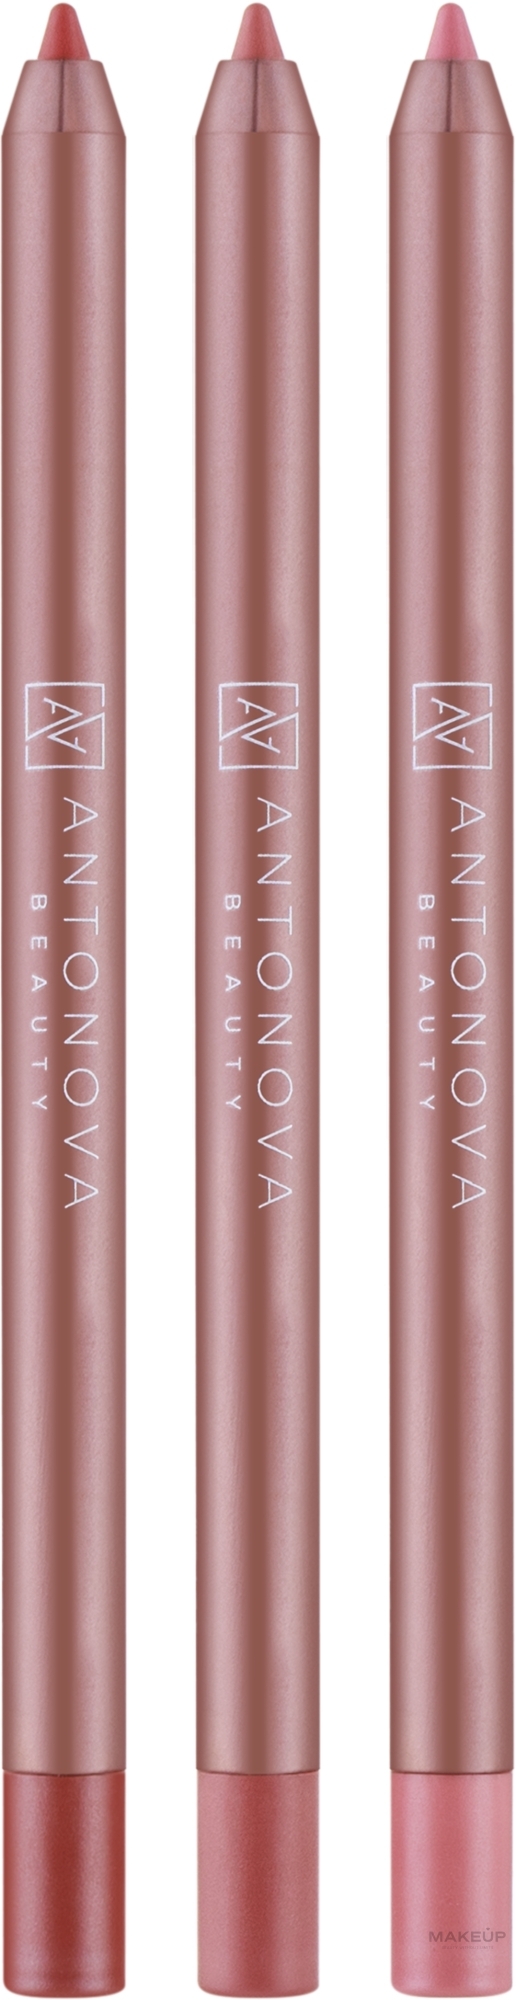 Набор карандашей для губ - Antonova Beauty Bon Voyage 3in1 Lip Pencil Set — фото 3x1.2g